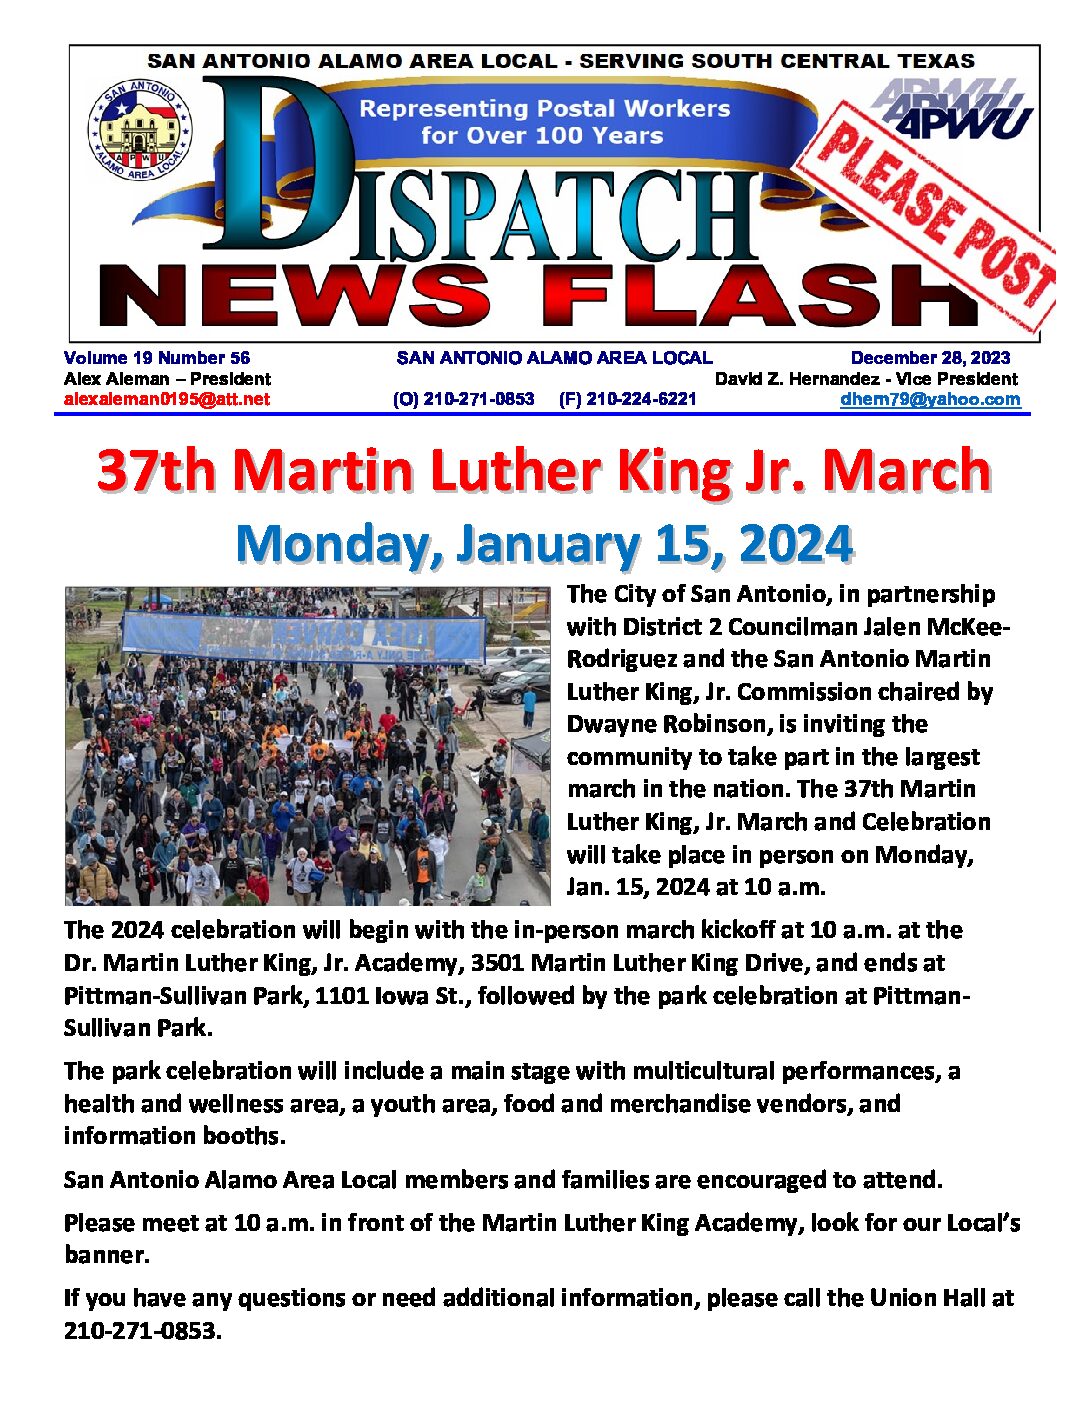 NewsFlash 19-56 2023 MLK Jr. March - 